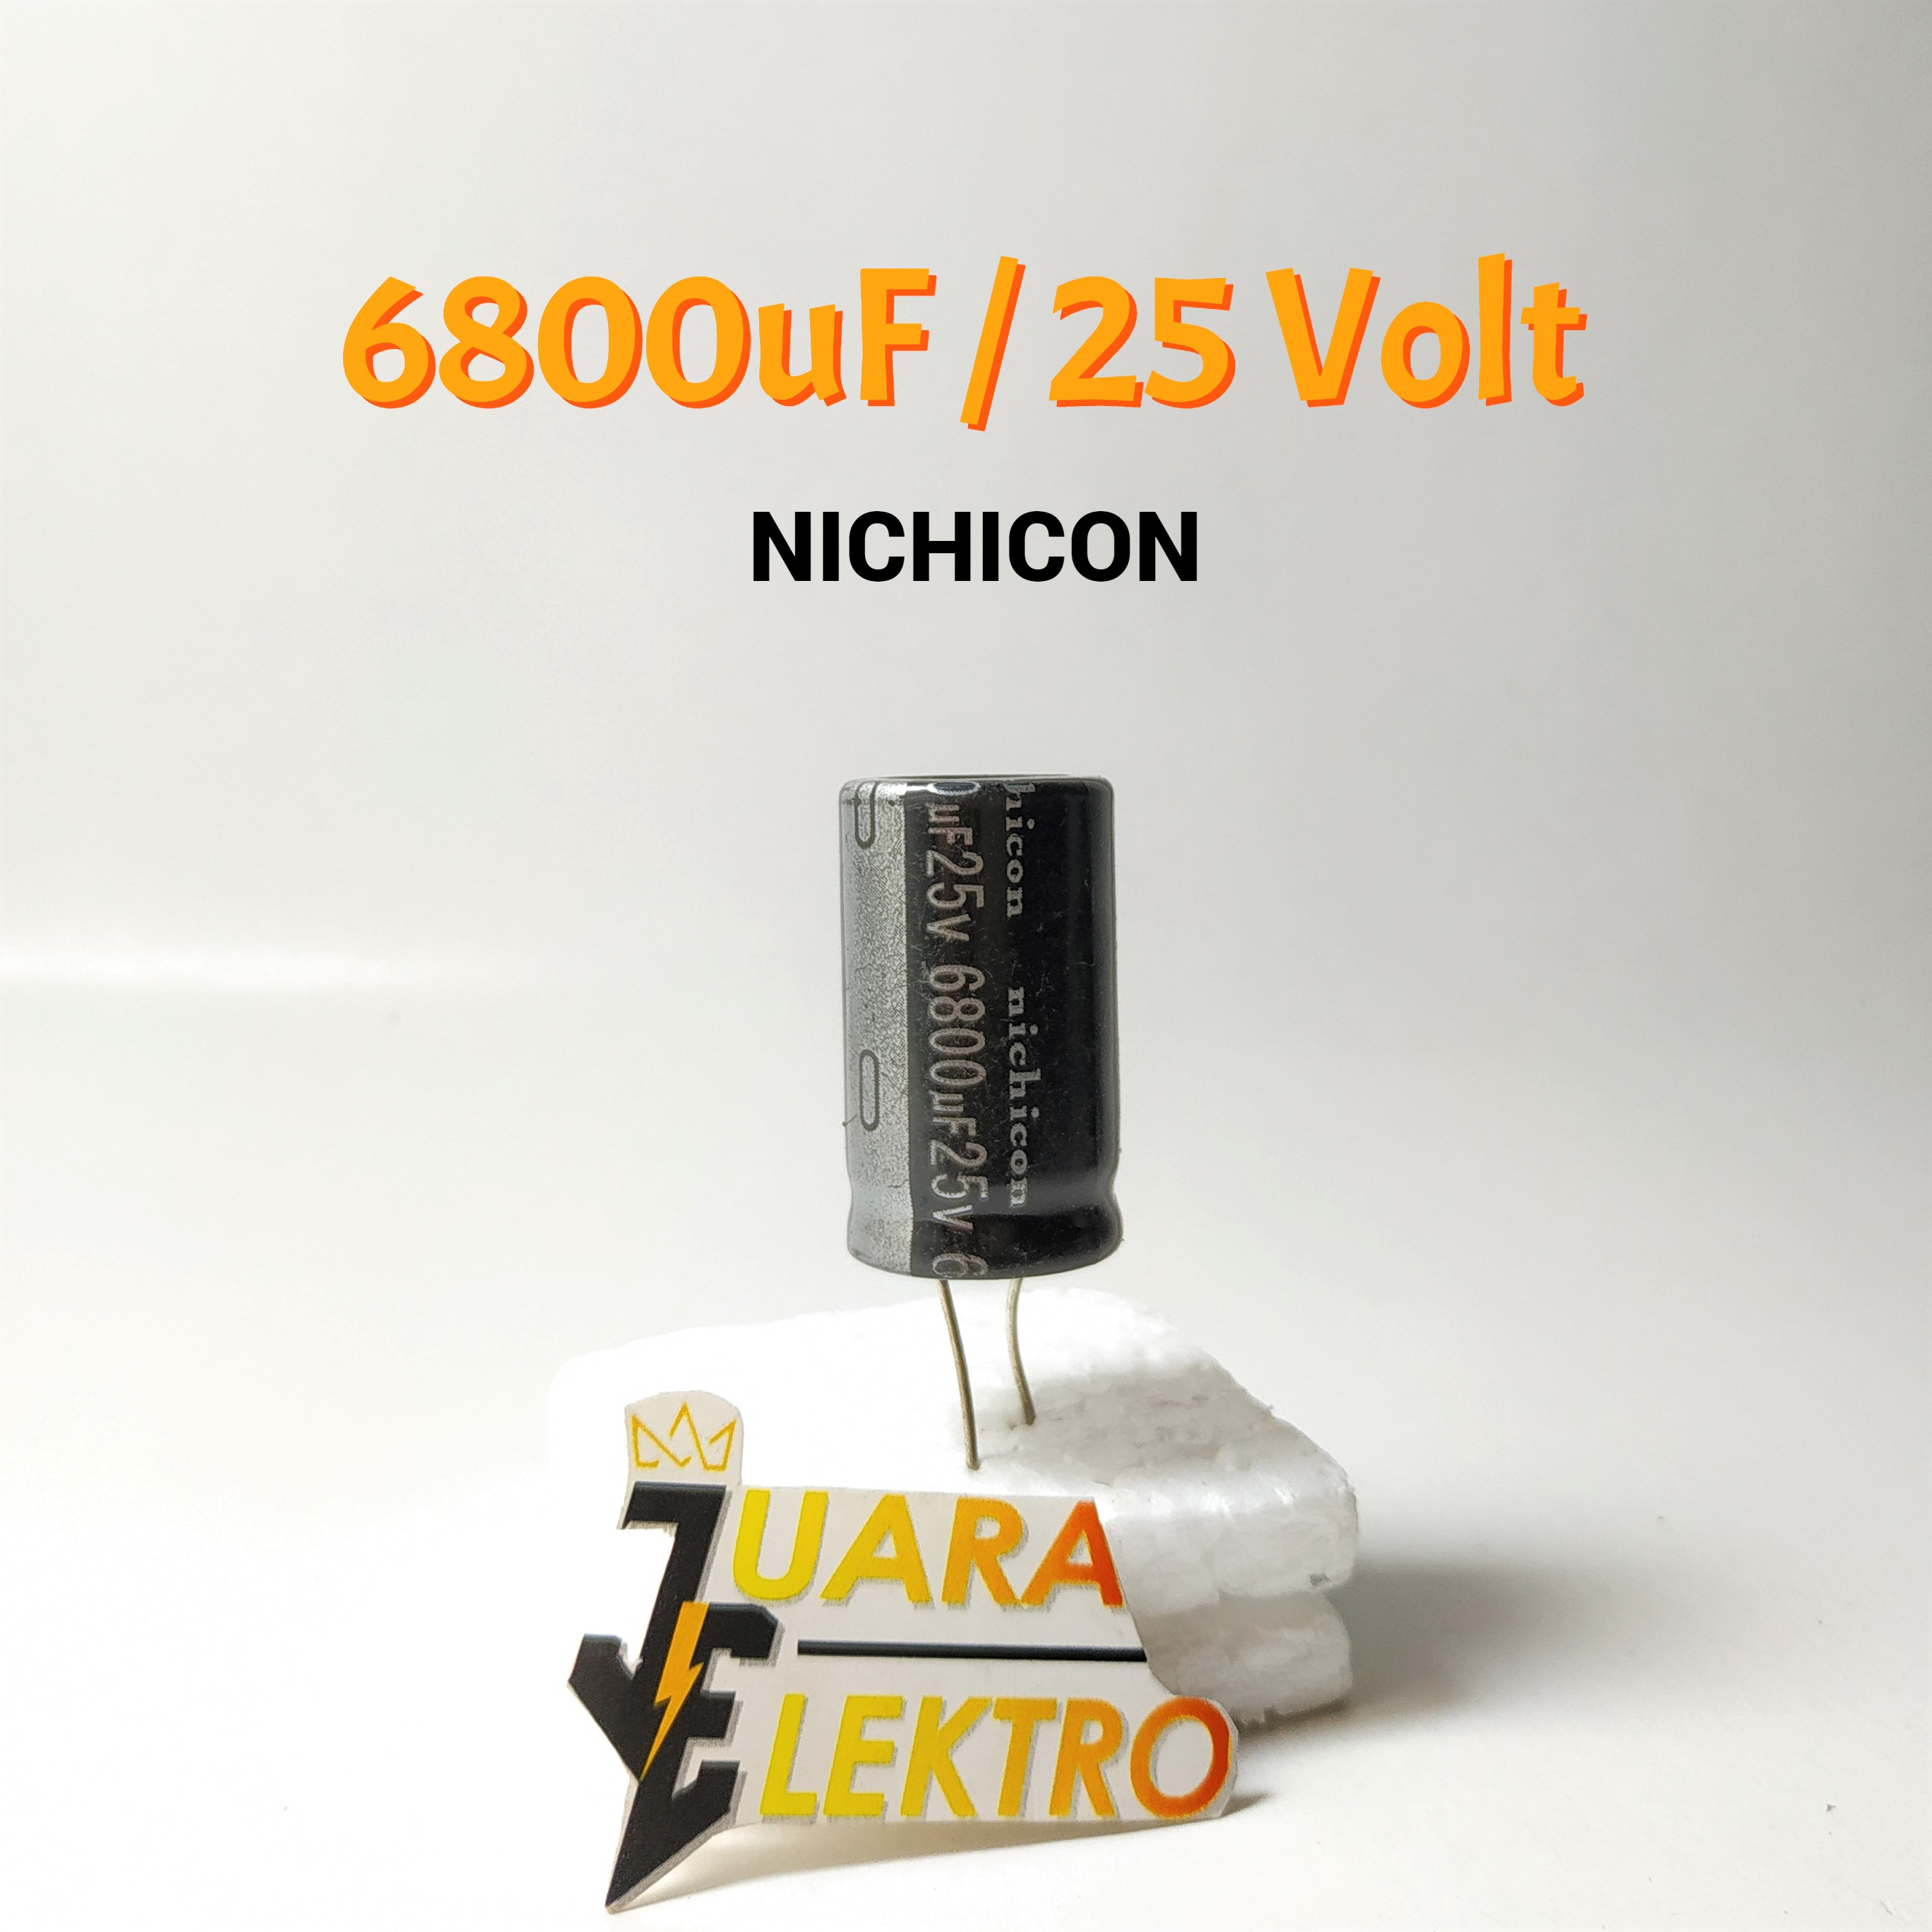 KAPASITOR ELCO 6.800uF / 25V (1 Pcs) | Capasitor Elko 6.800 uF/25 Volt NICHICON